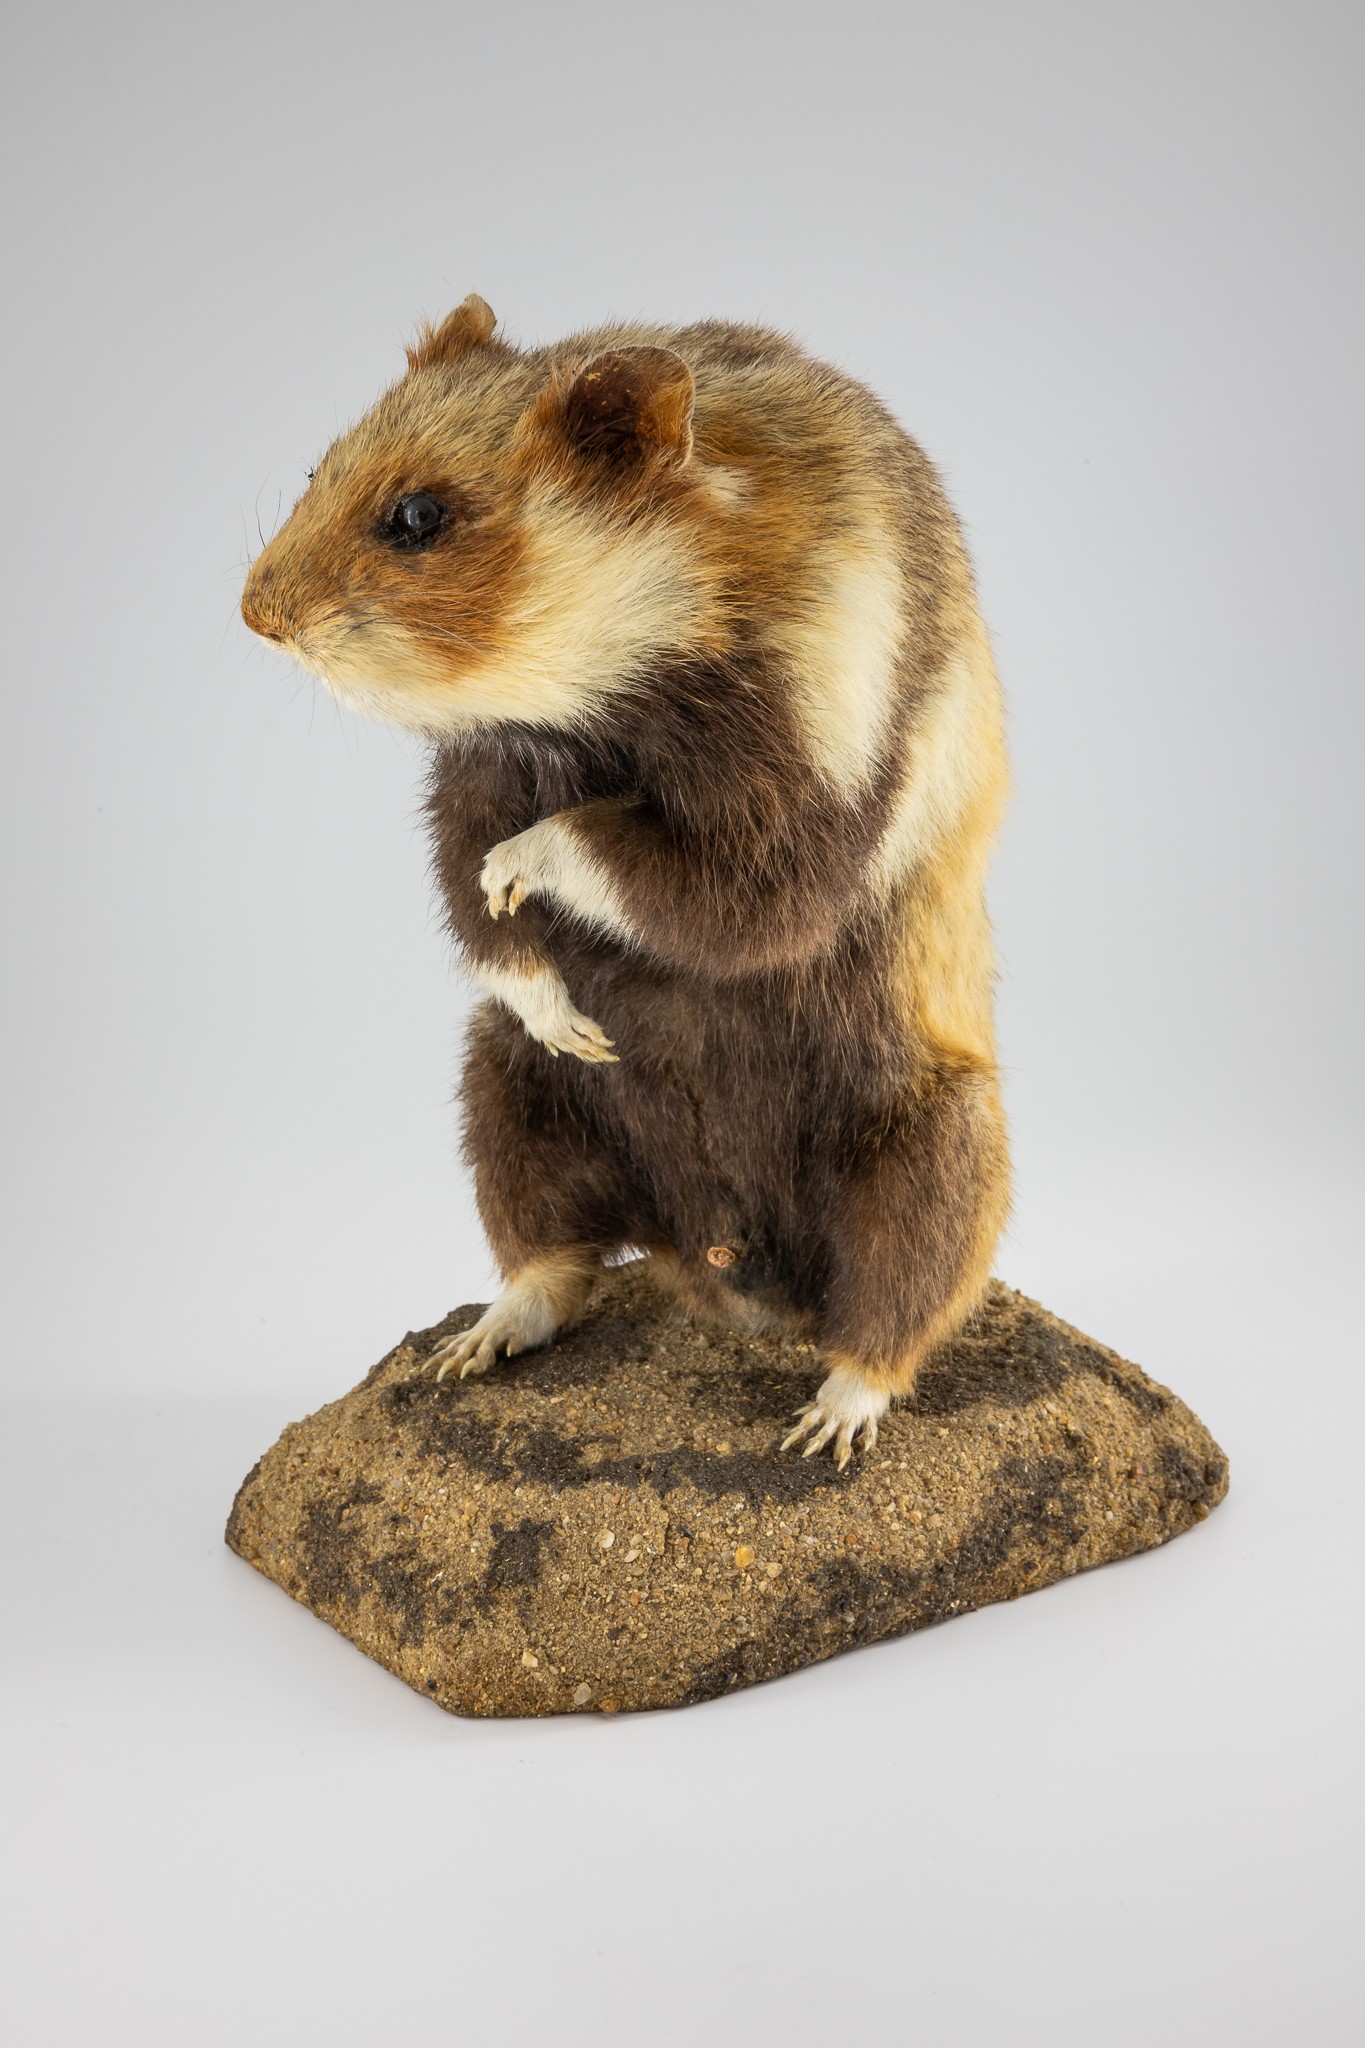 Feldhamster (Cricetus cricetus) (Museum der Westlausitz Kamenz CC BY-SA)